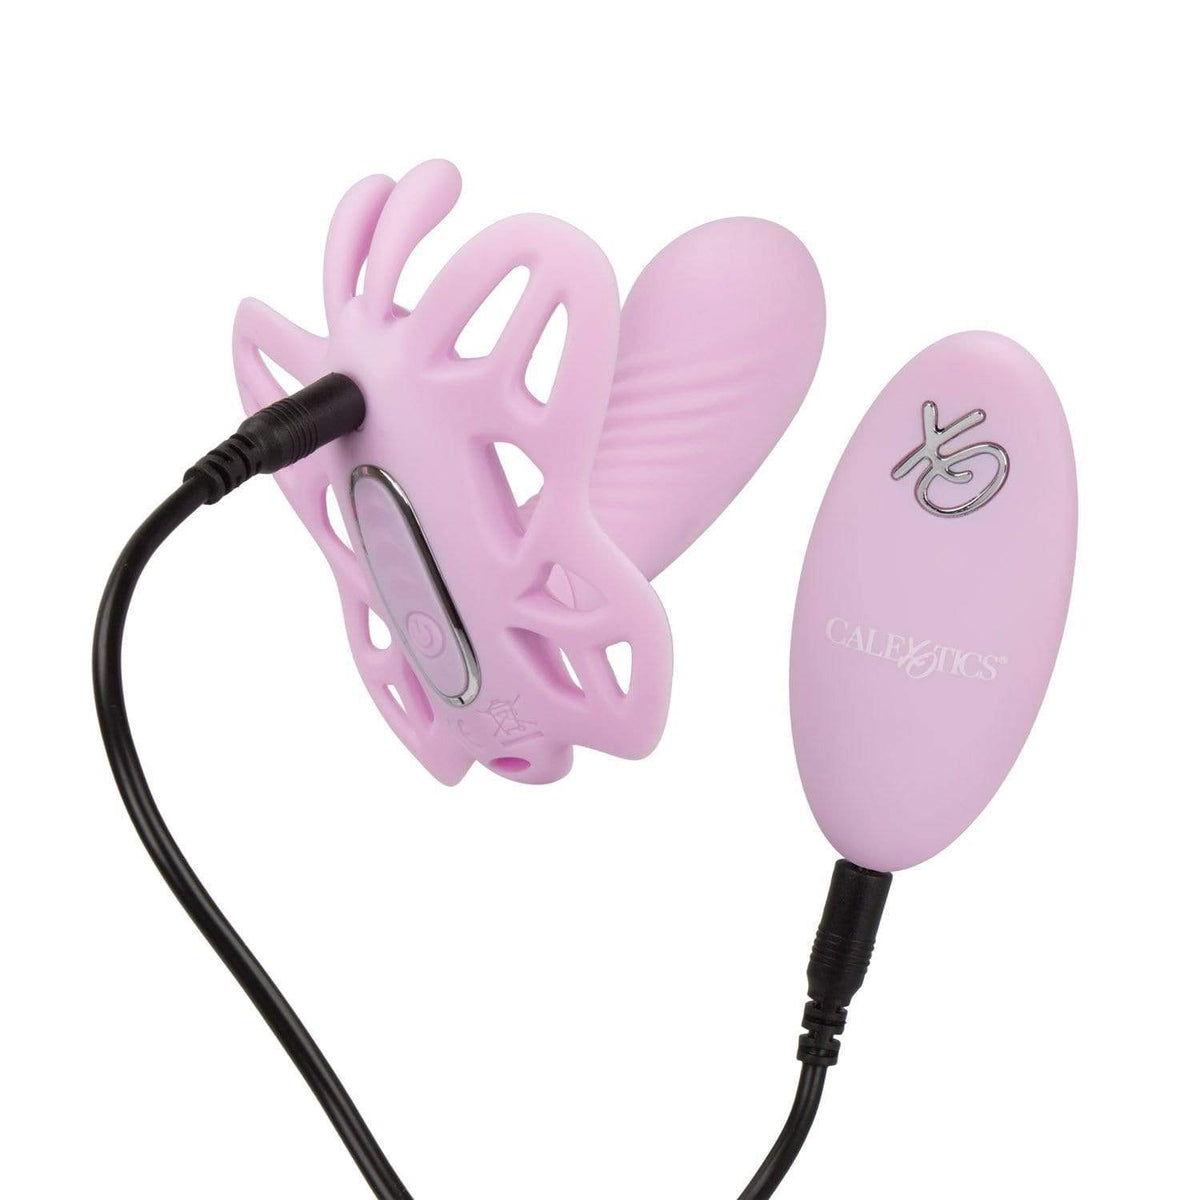 California Exotics - Venus Butterfly Silicone Remote Venus G Spot Vibrator (Pink)    Remote Control Dildo w/o Suction Cup (Vibration) Rechargeable